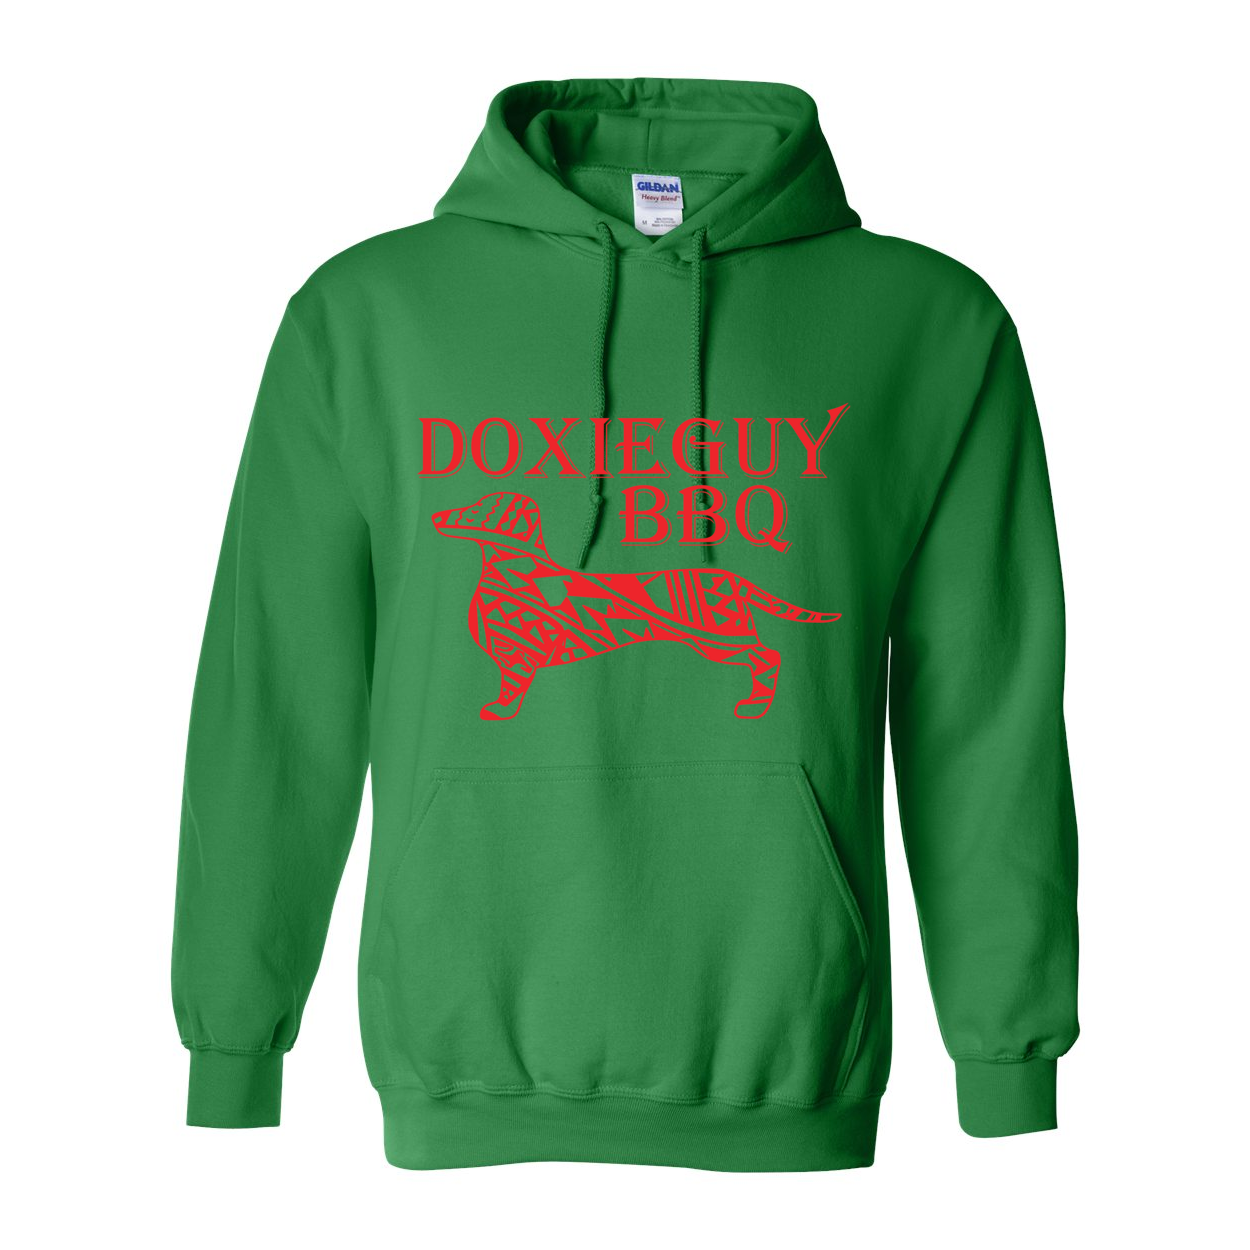 DoxieGuy BBQ - Heavy Blend Hooded Sweatshirt